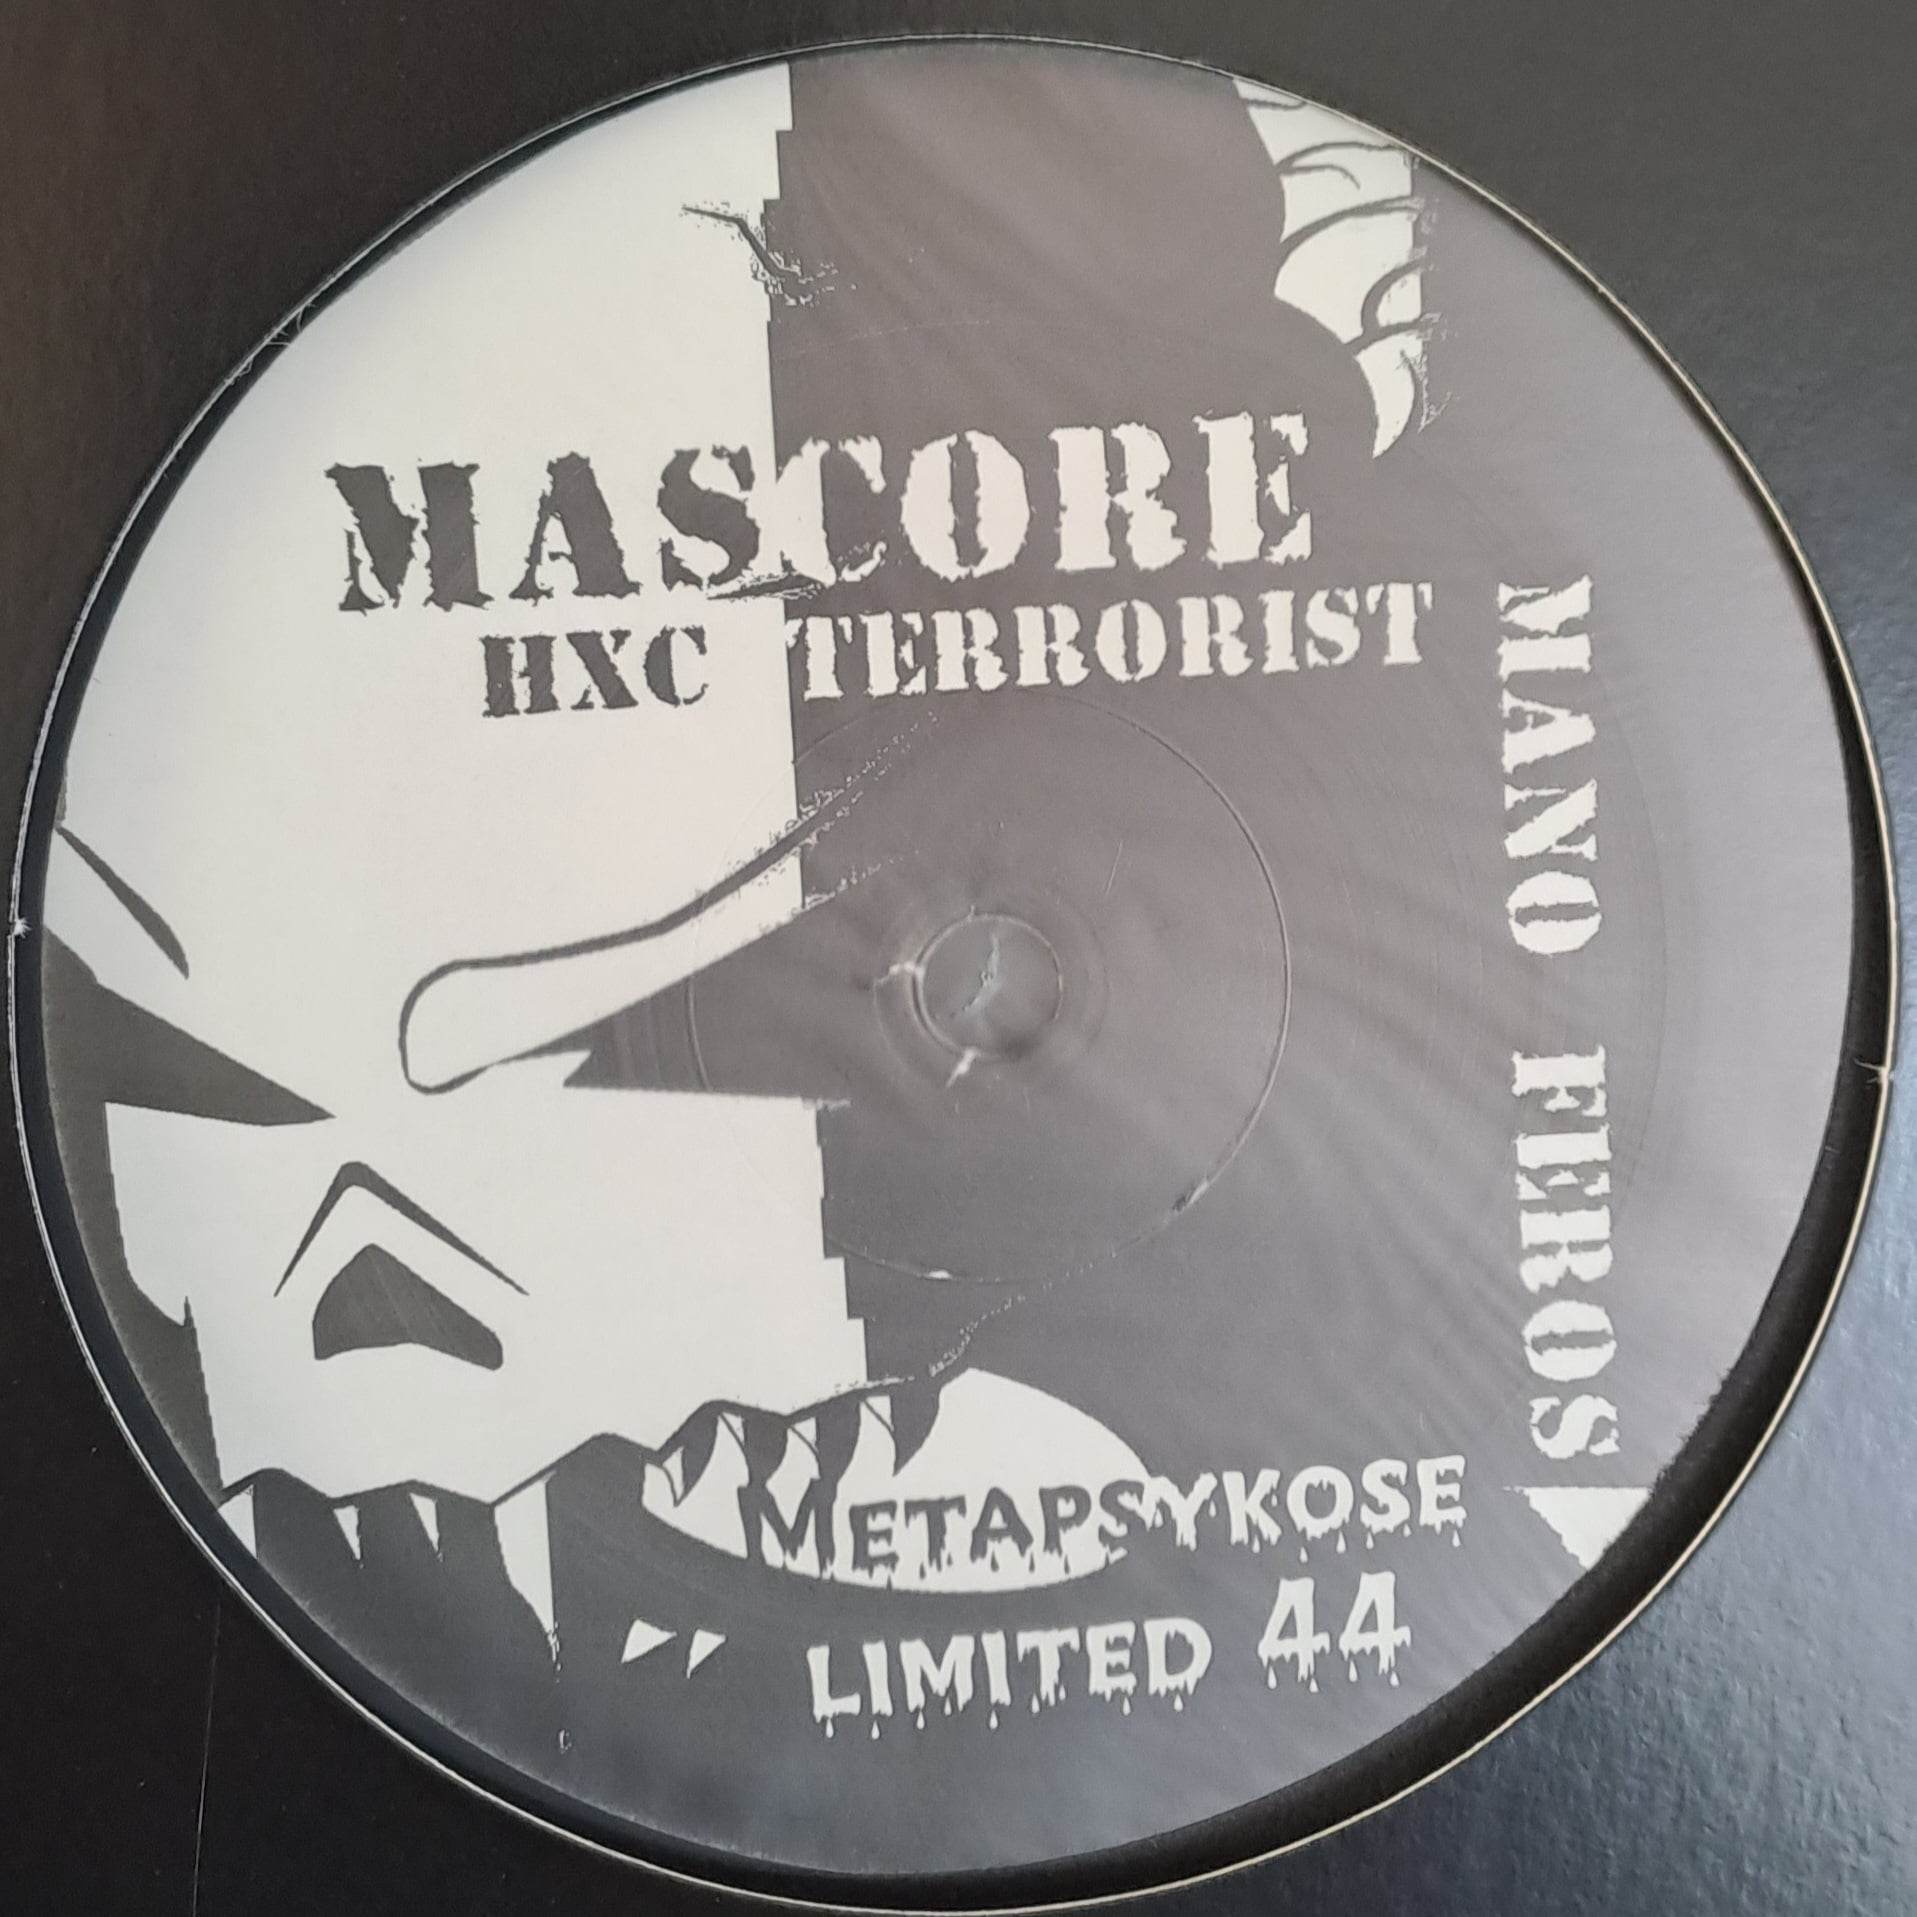 Metapsykose Limited 44 - vinyle hardcore